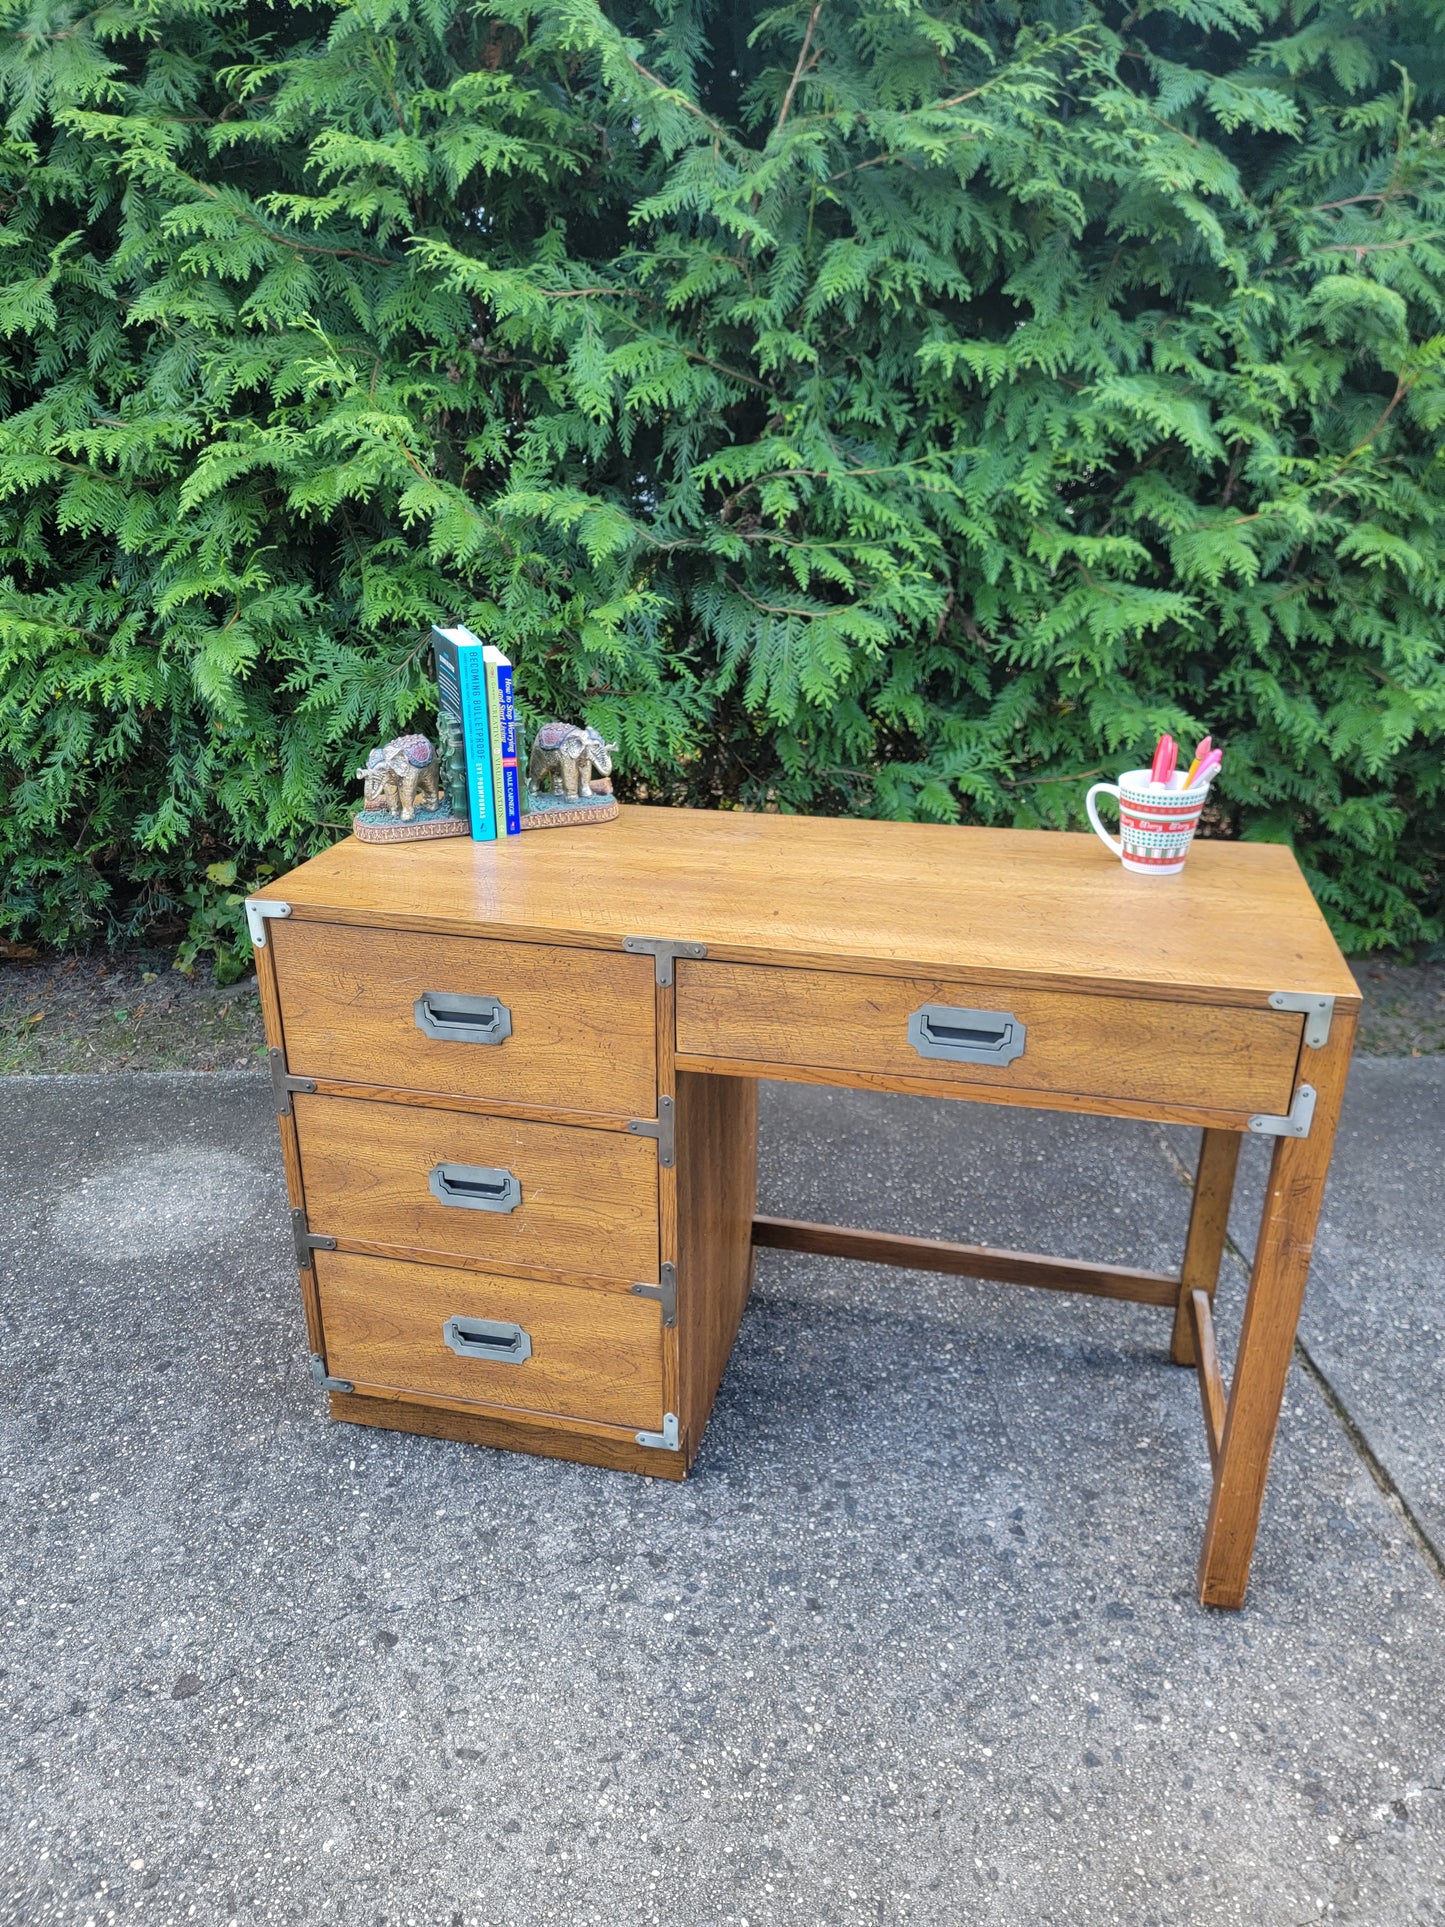 Bernhardt Oak Campaign Style Student Desk, Mid to Late 20th Century Decor